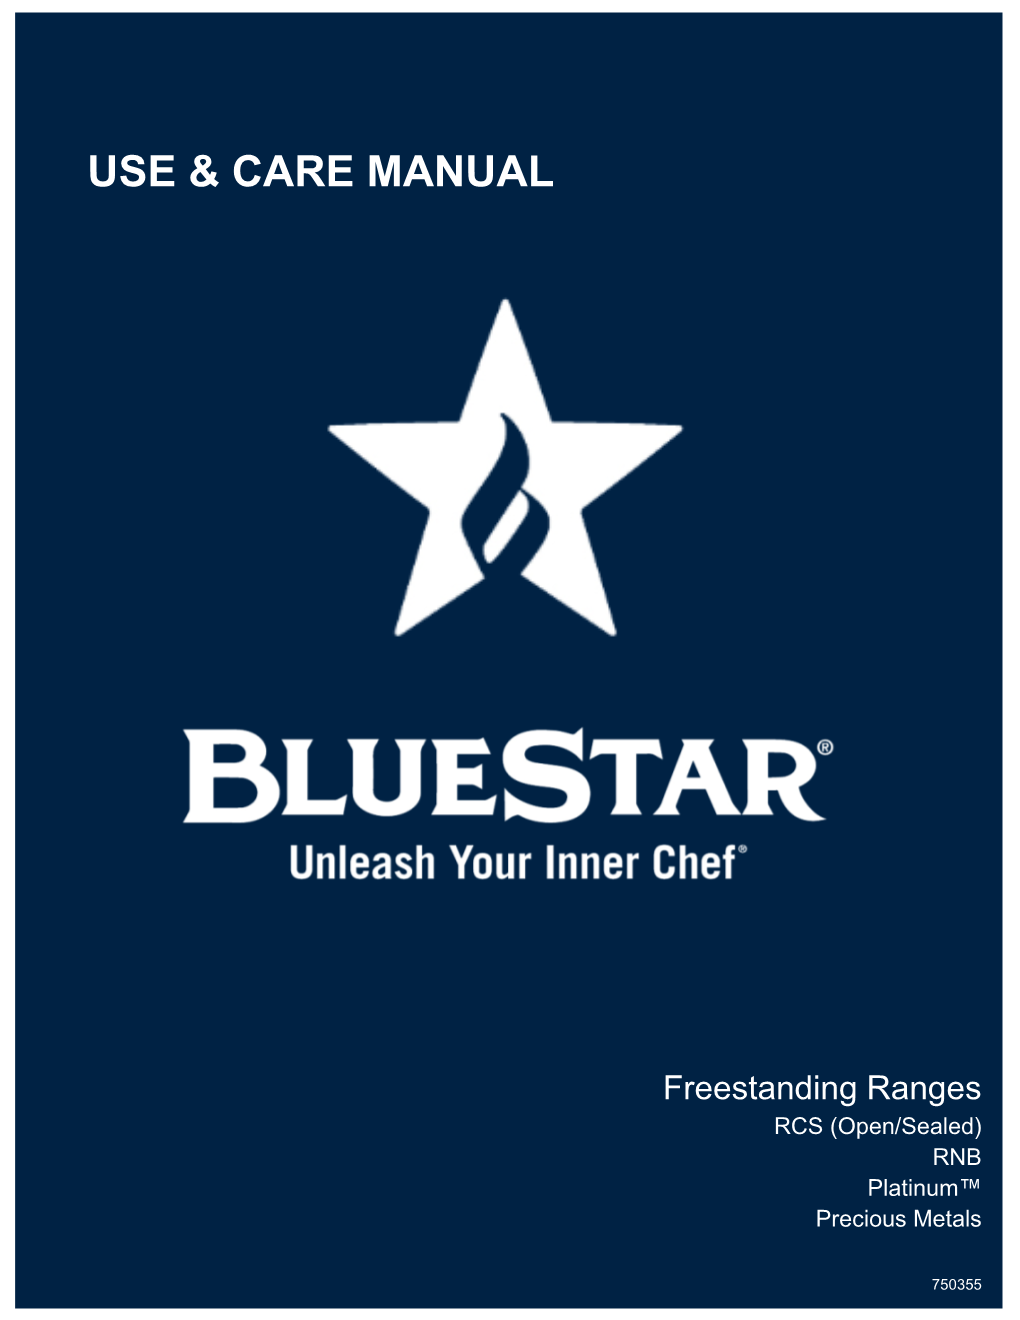 Freestanding Range Use & Care Manual